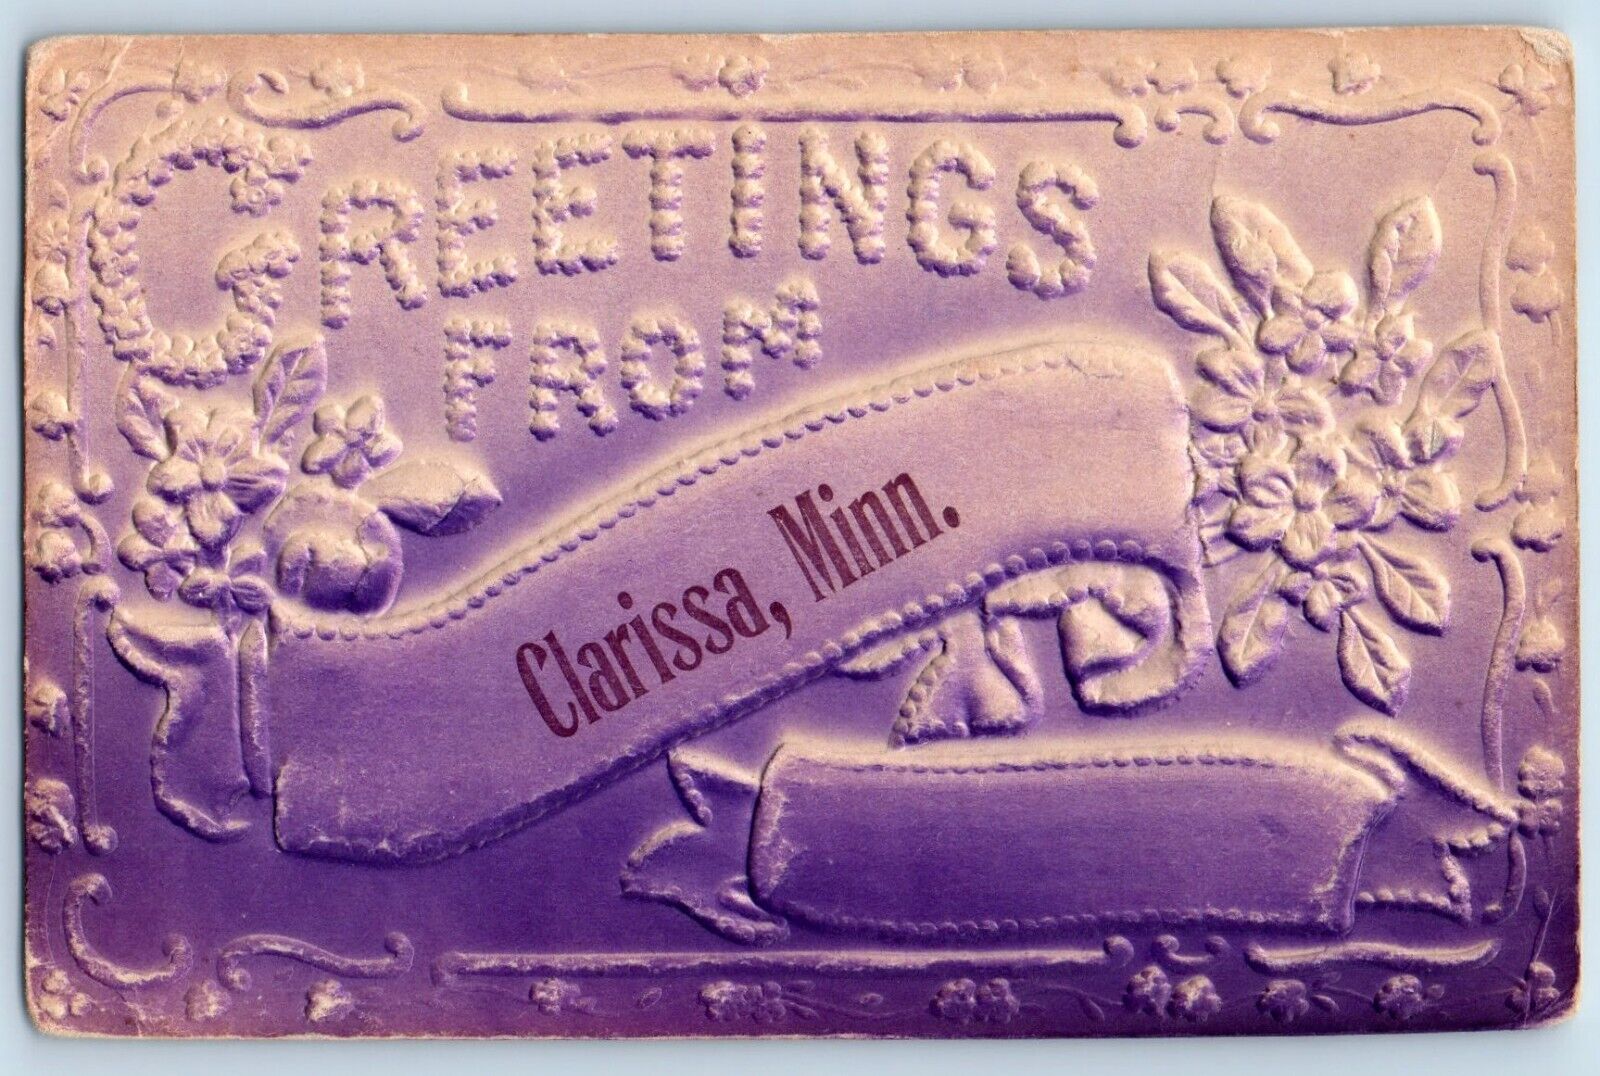 Clarissa Minnesota Postcard Greetings Airbrushed Embossed c1910 Vintage Antique